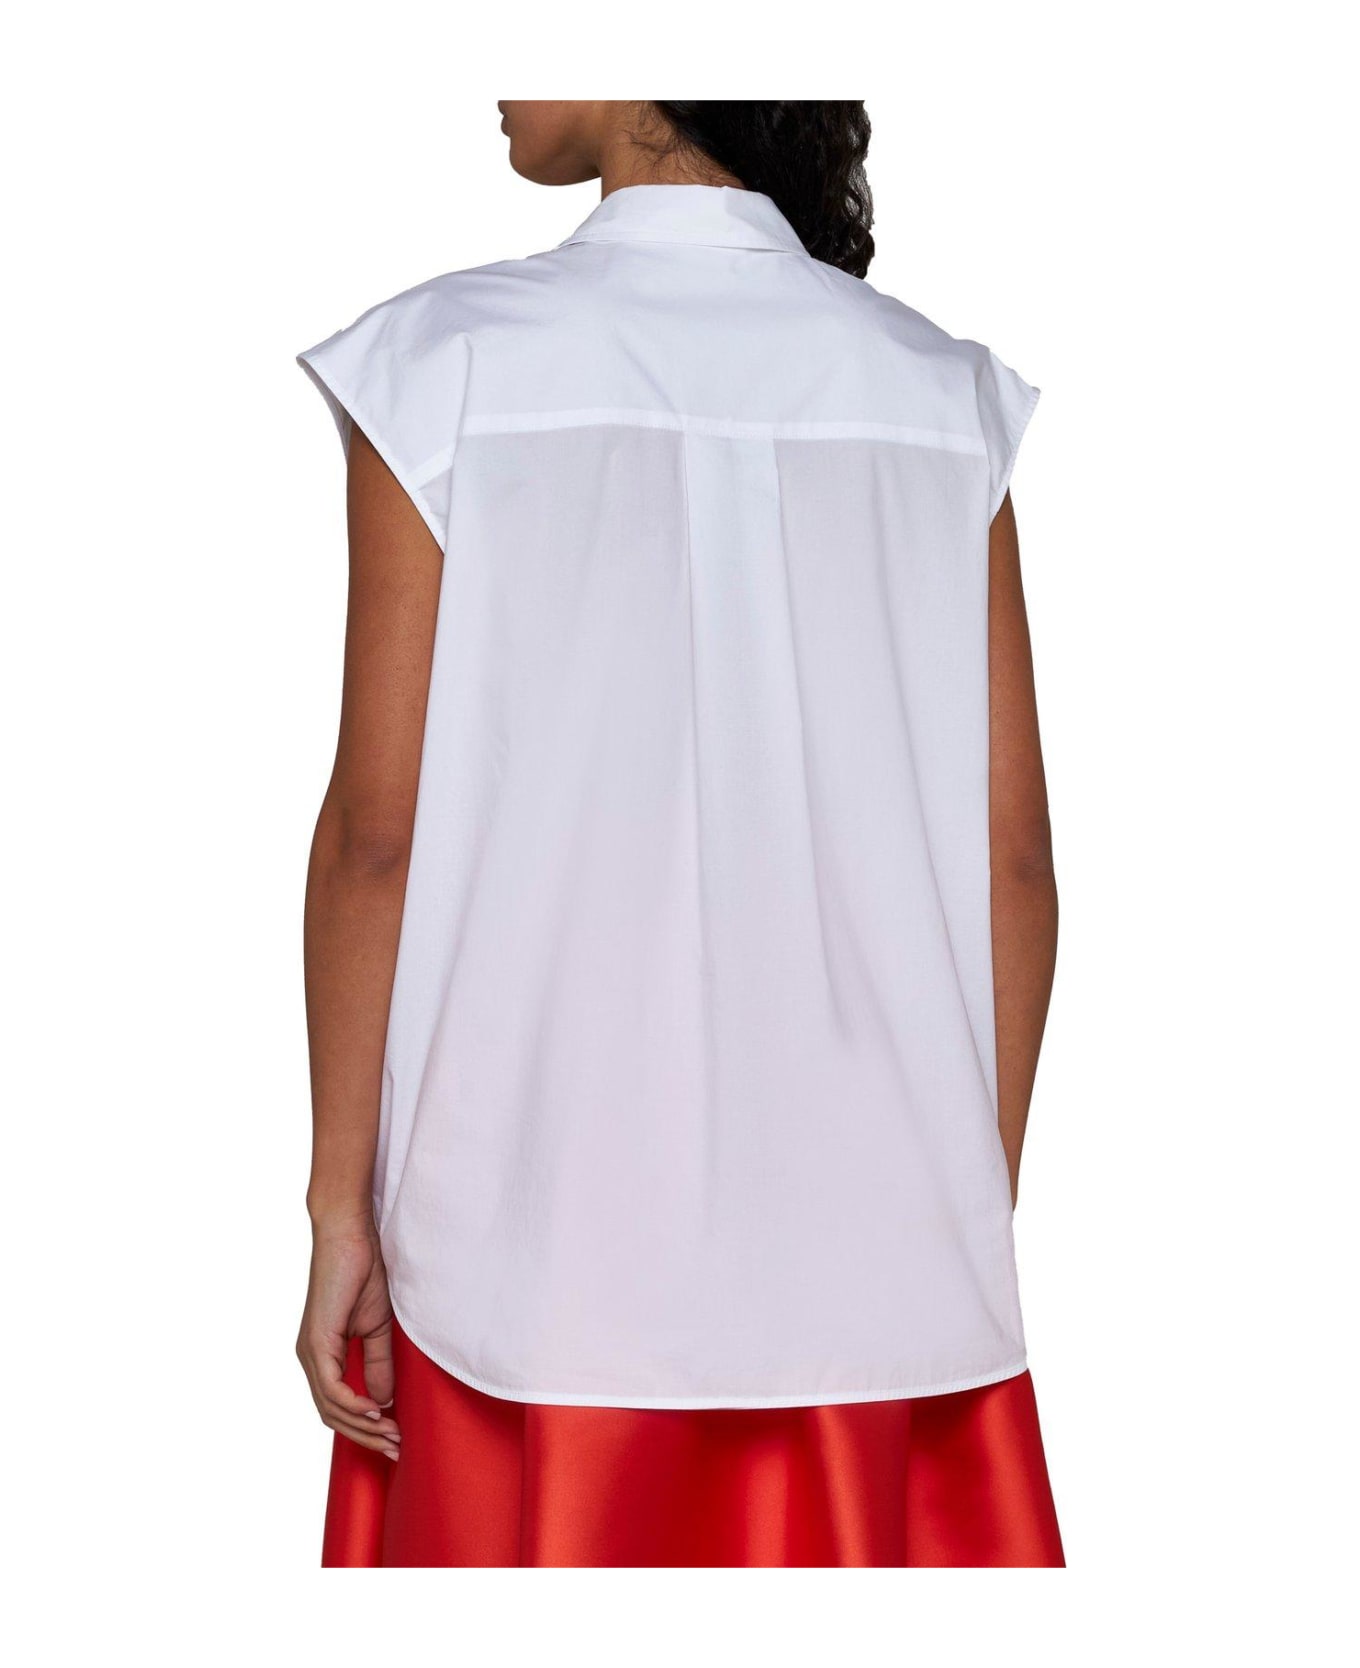 Parosh Embroidered Sleeveless Shirt - White